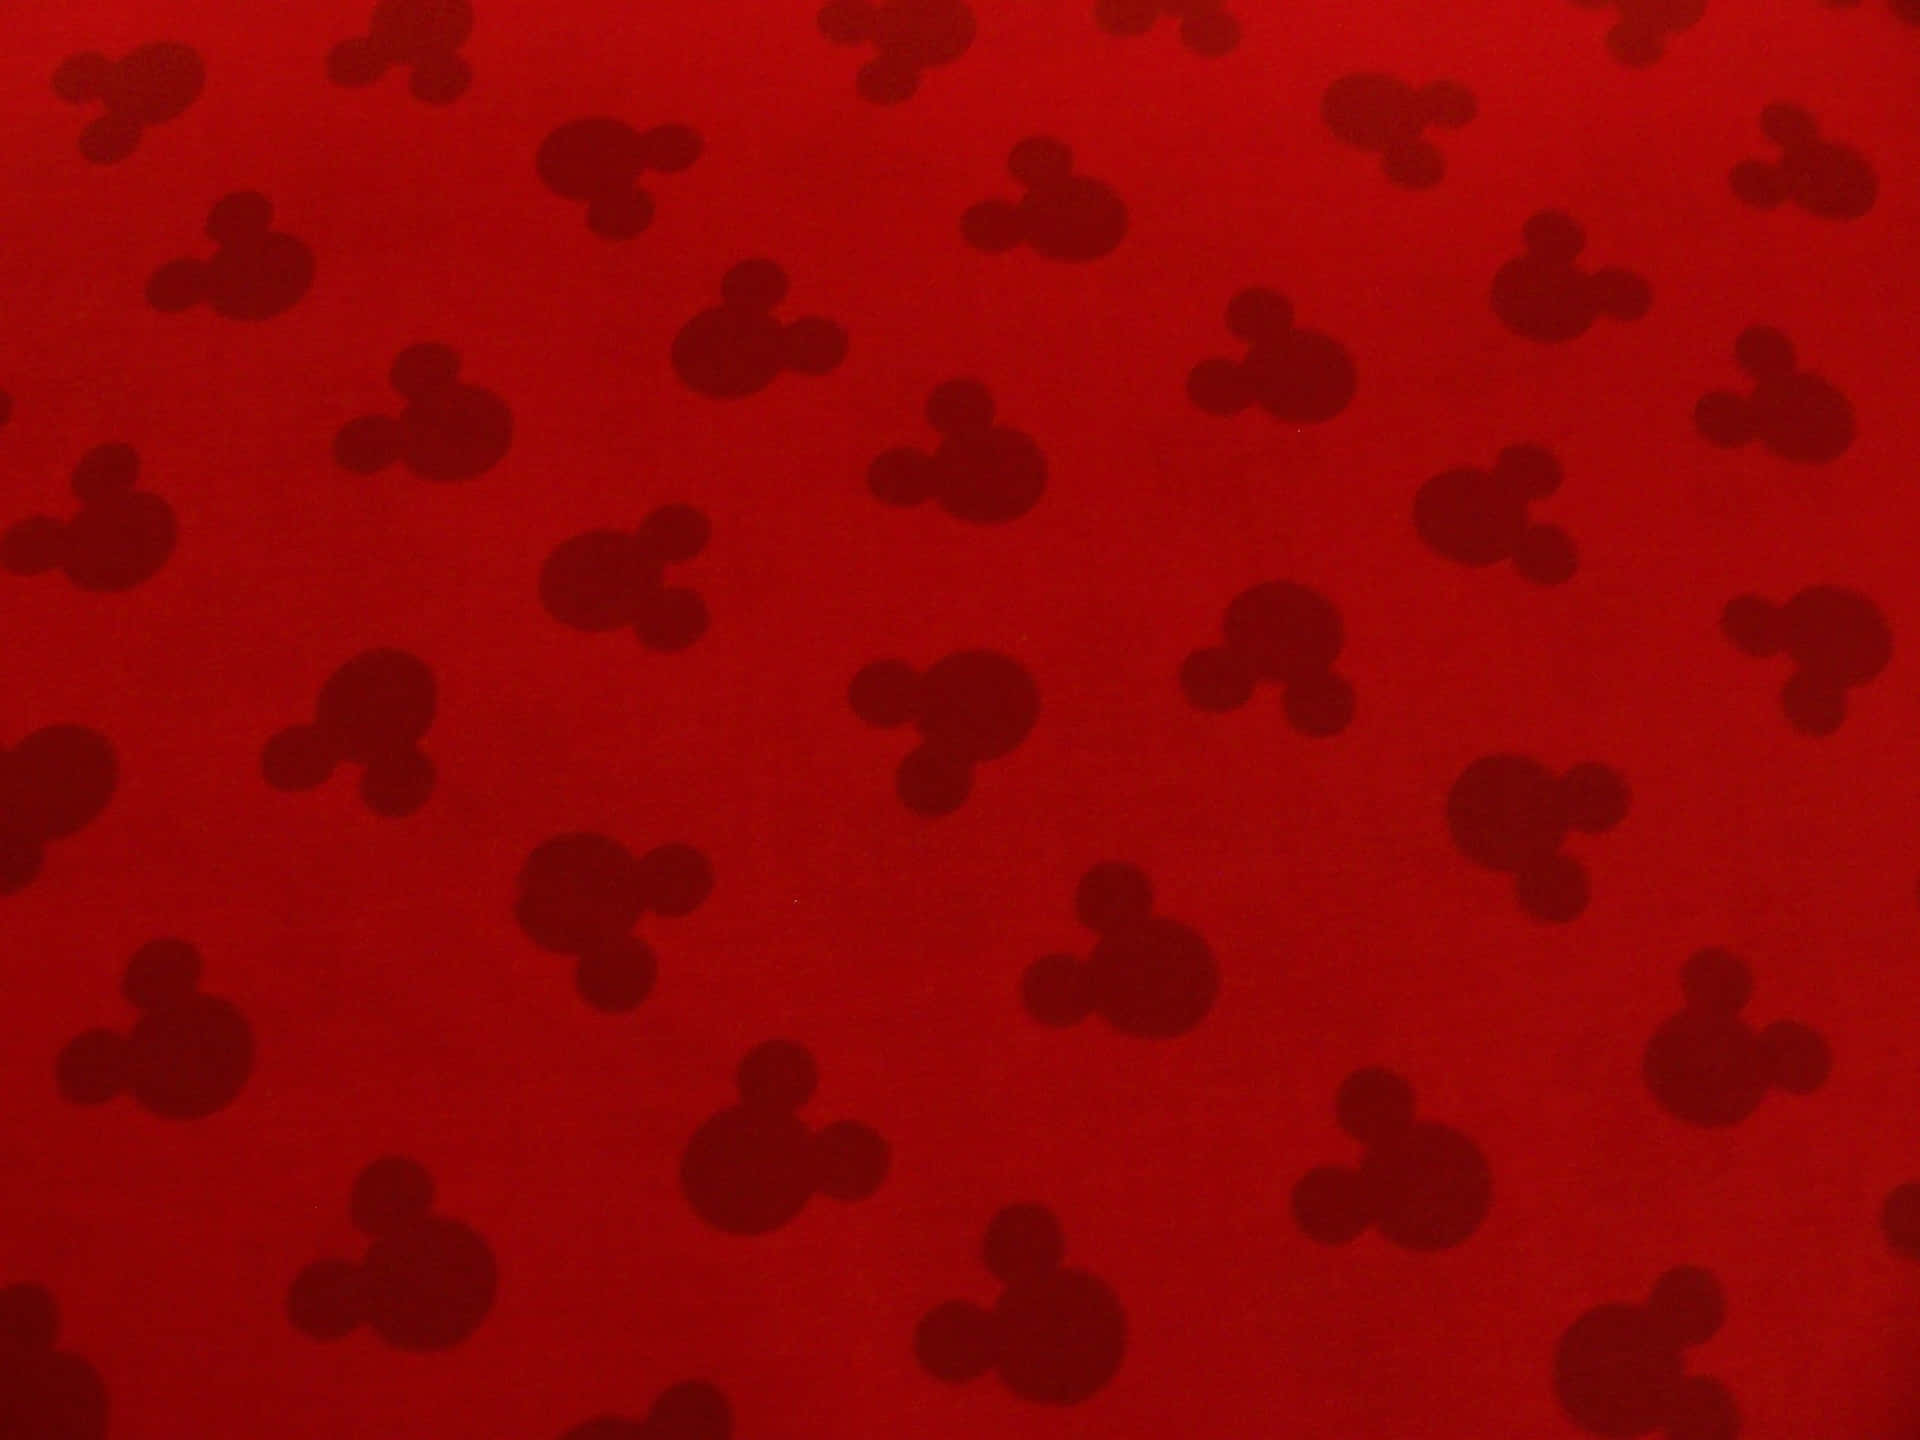 Mickey Mouse Ører - den quintessentielle symbol for Disney sjov! Wallpaper